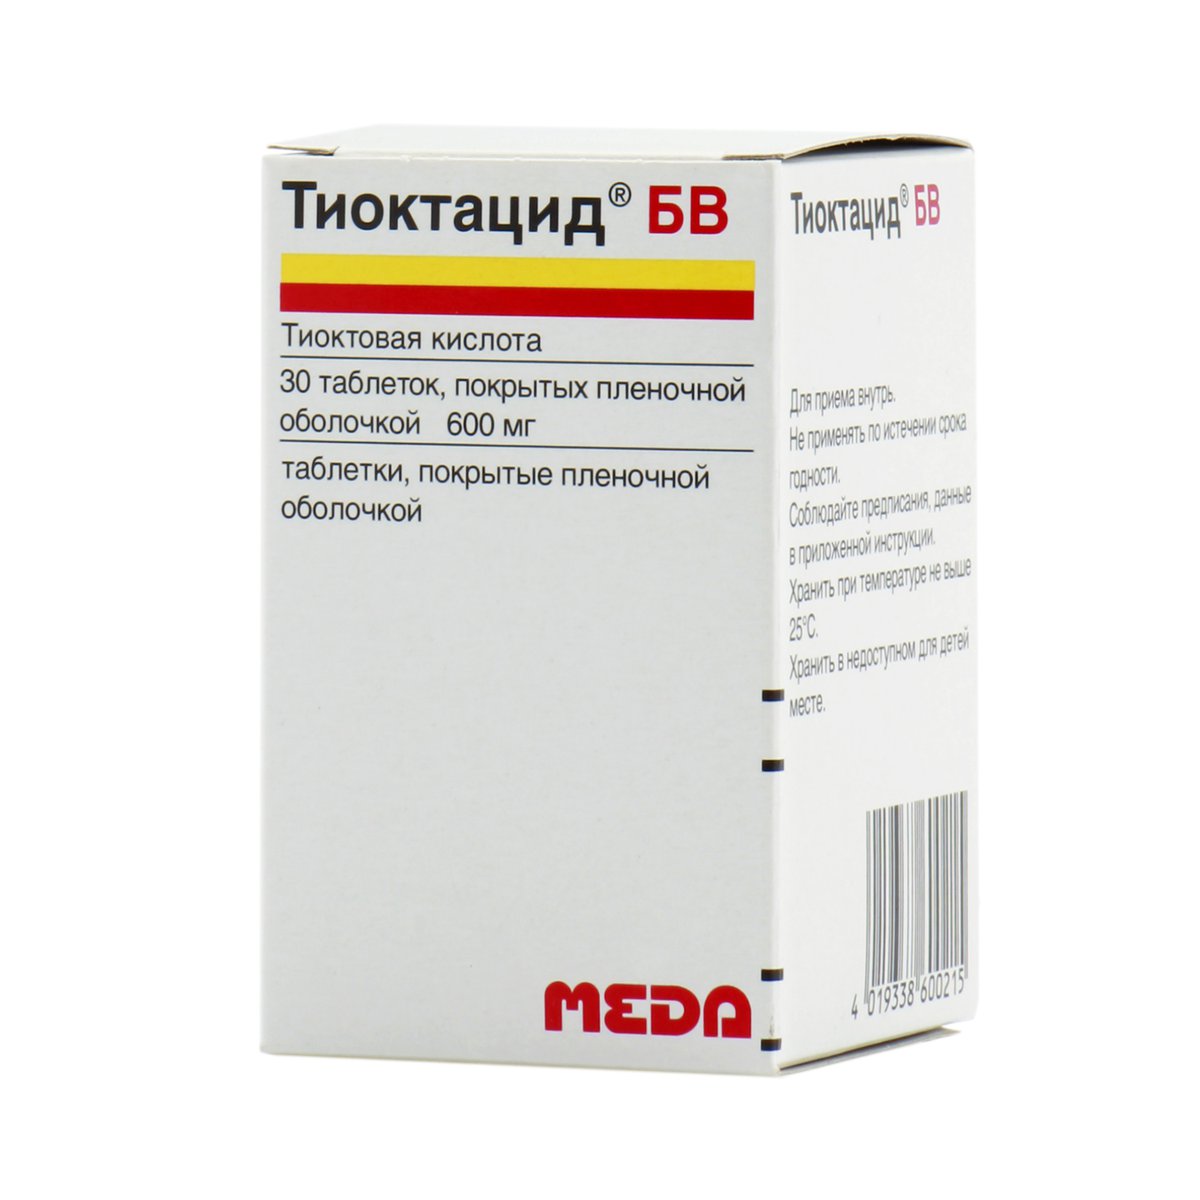 Тиоктацид (таблетки, 30 шт, 600 мг) - цена,  онлайн  .